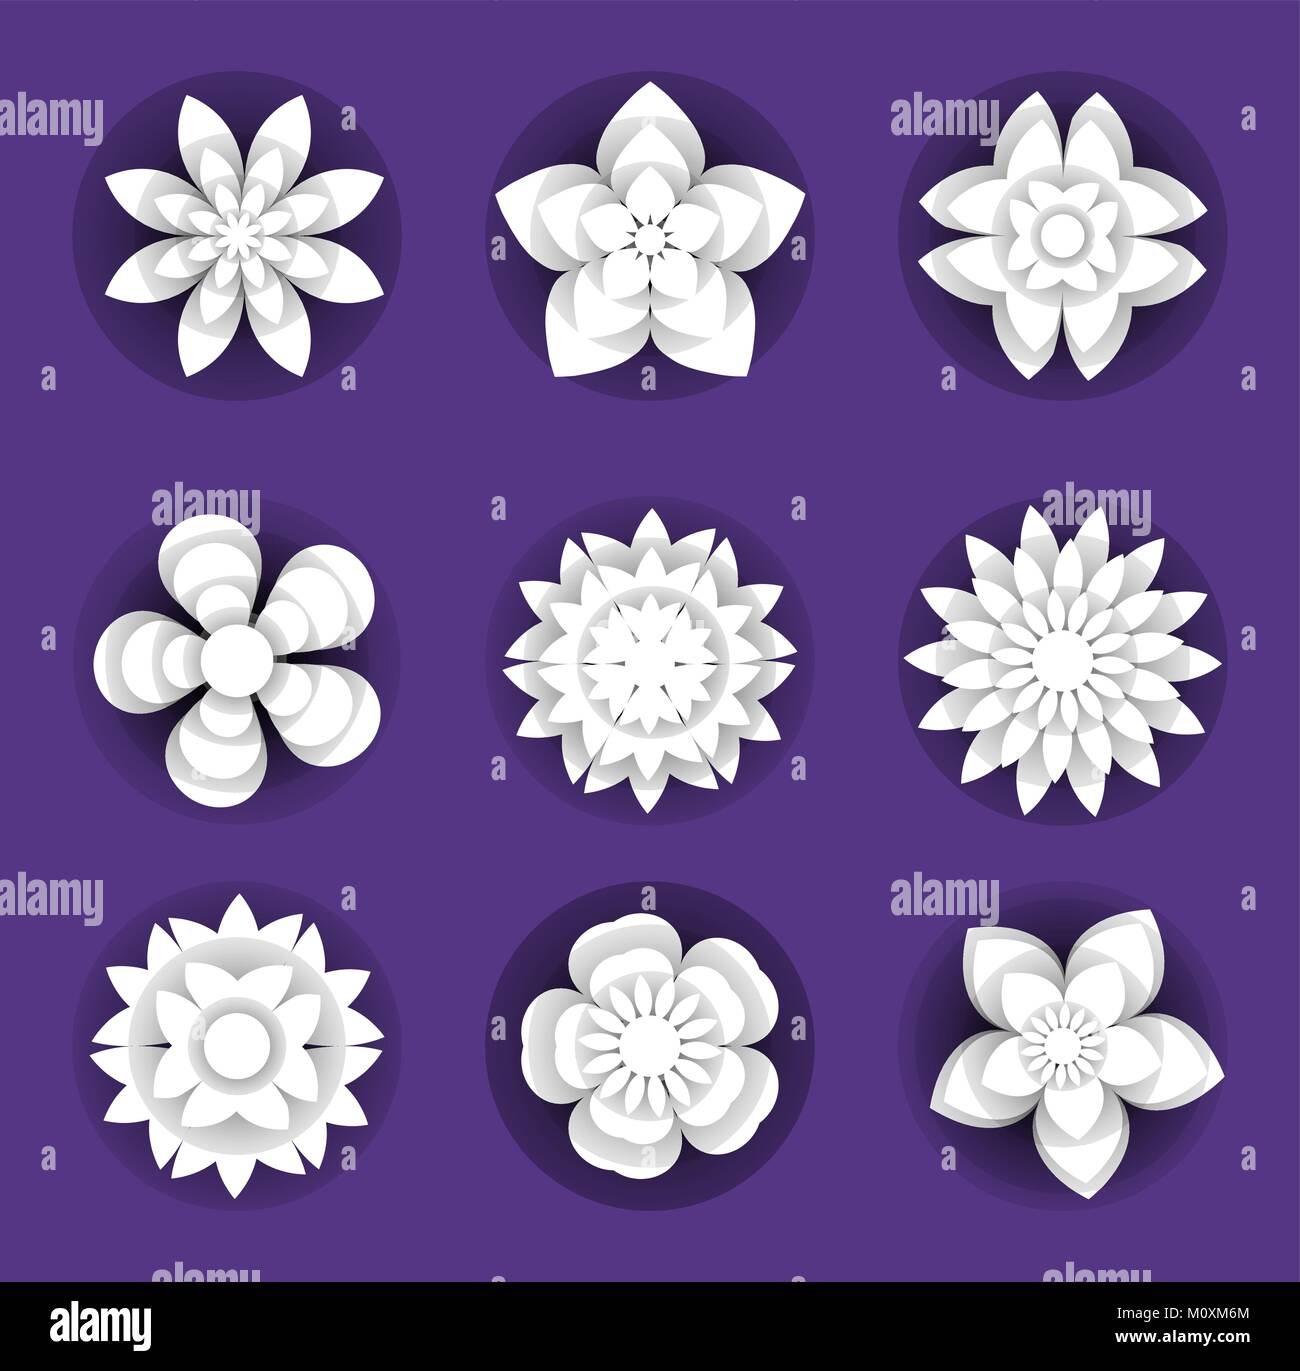 Blumen Papier Geschnitten Floral Collection 3d Stil Papercut Elemente Fur Ihr Design Carving Oder Origami Art Vector Illustration Stock Vektorgrafik Alamy